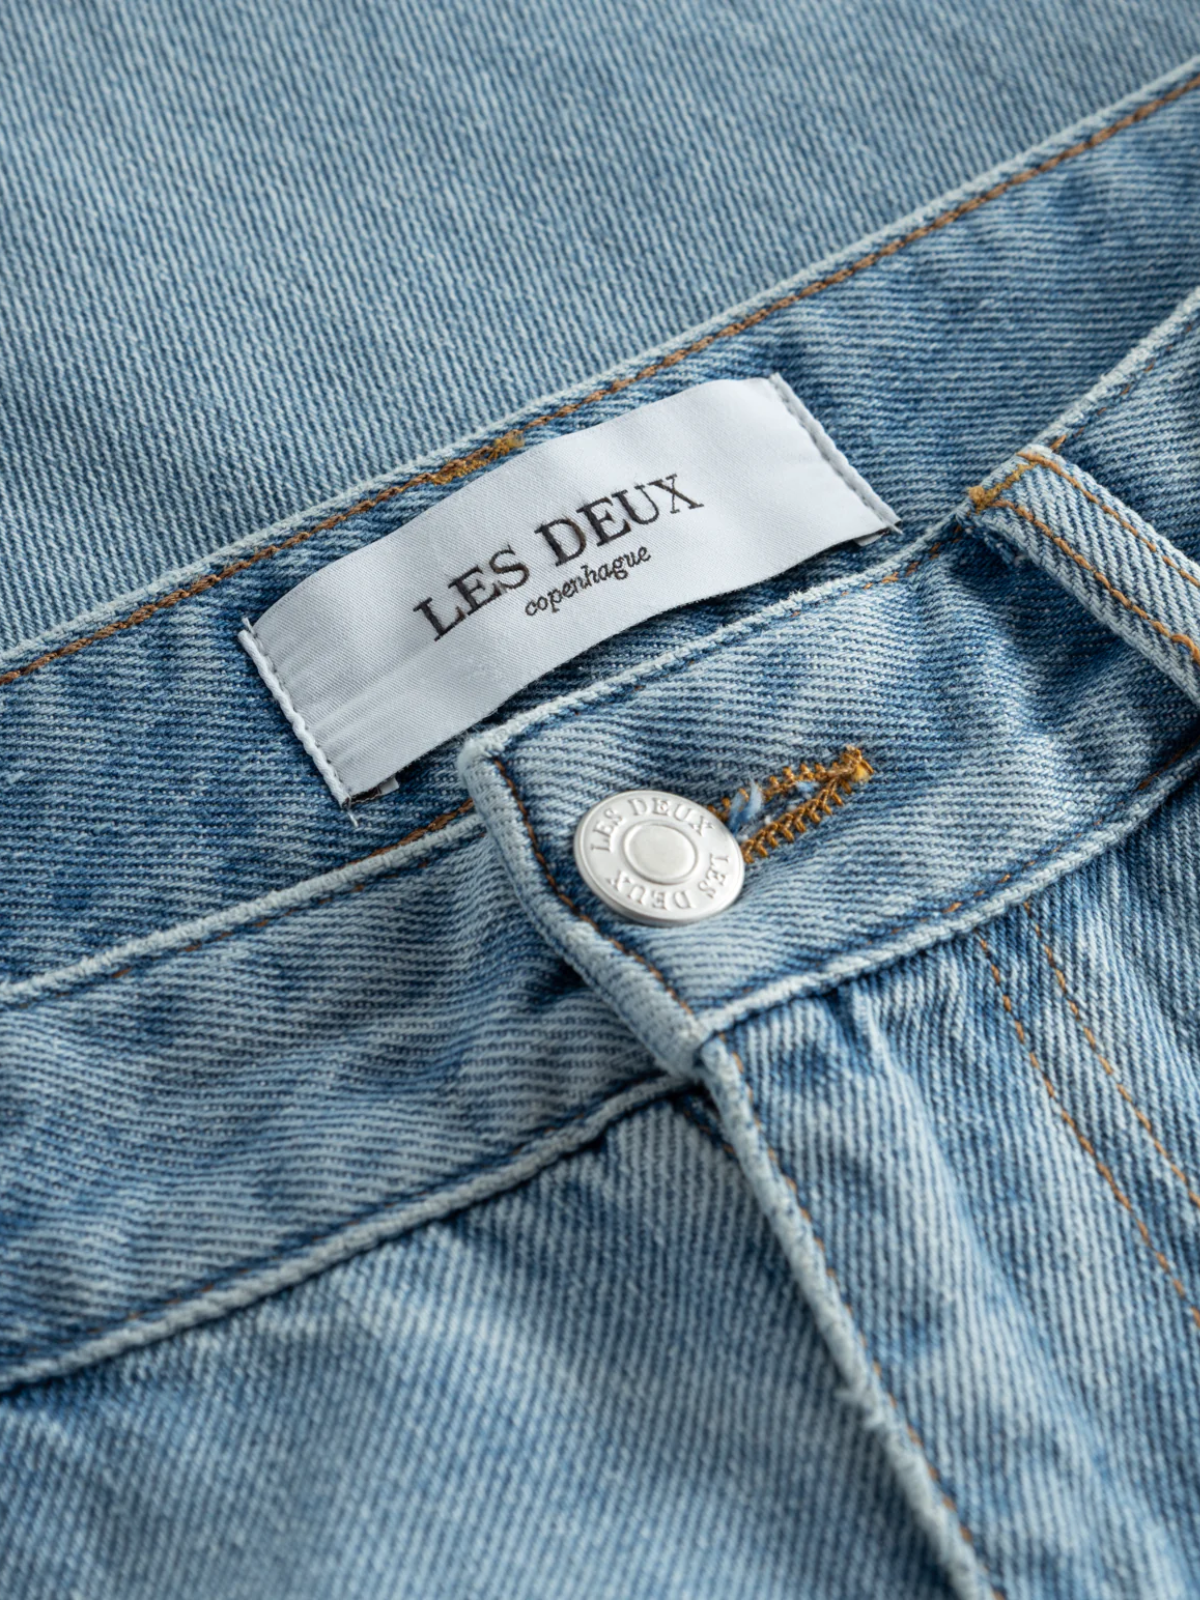 les deux ryder relaxed jeans 100% organic cotton light wash denim kempt athens ga georgia men's clothing store